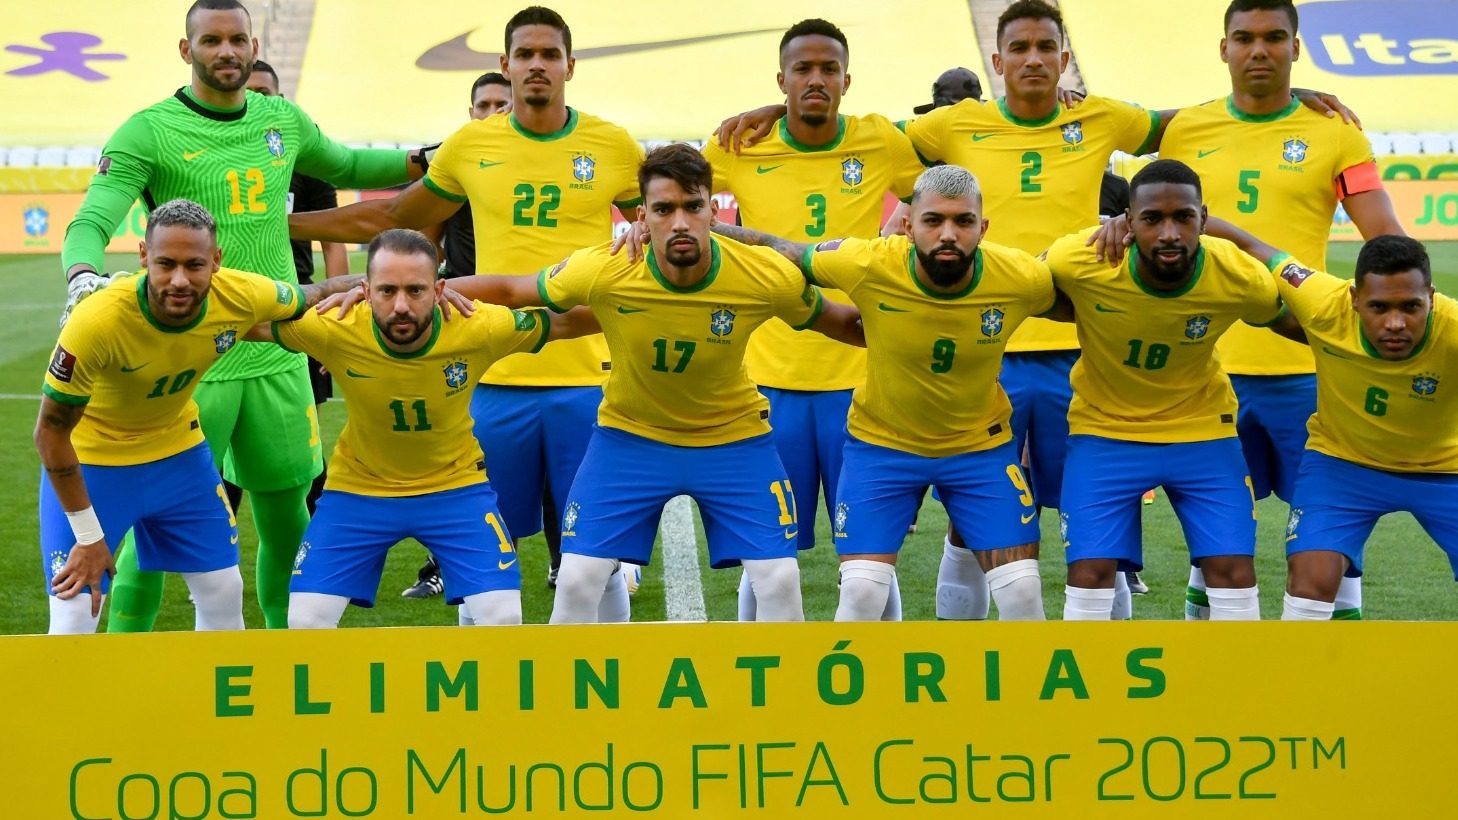 FIFA World Cup Qatar 2022: Brazil Final Squad Announcement